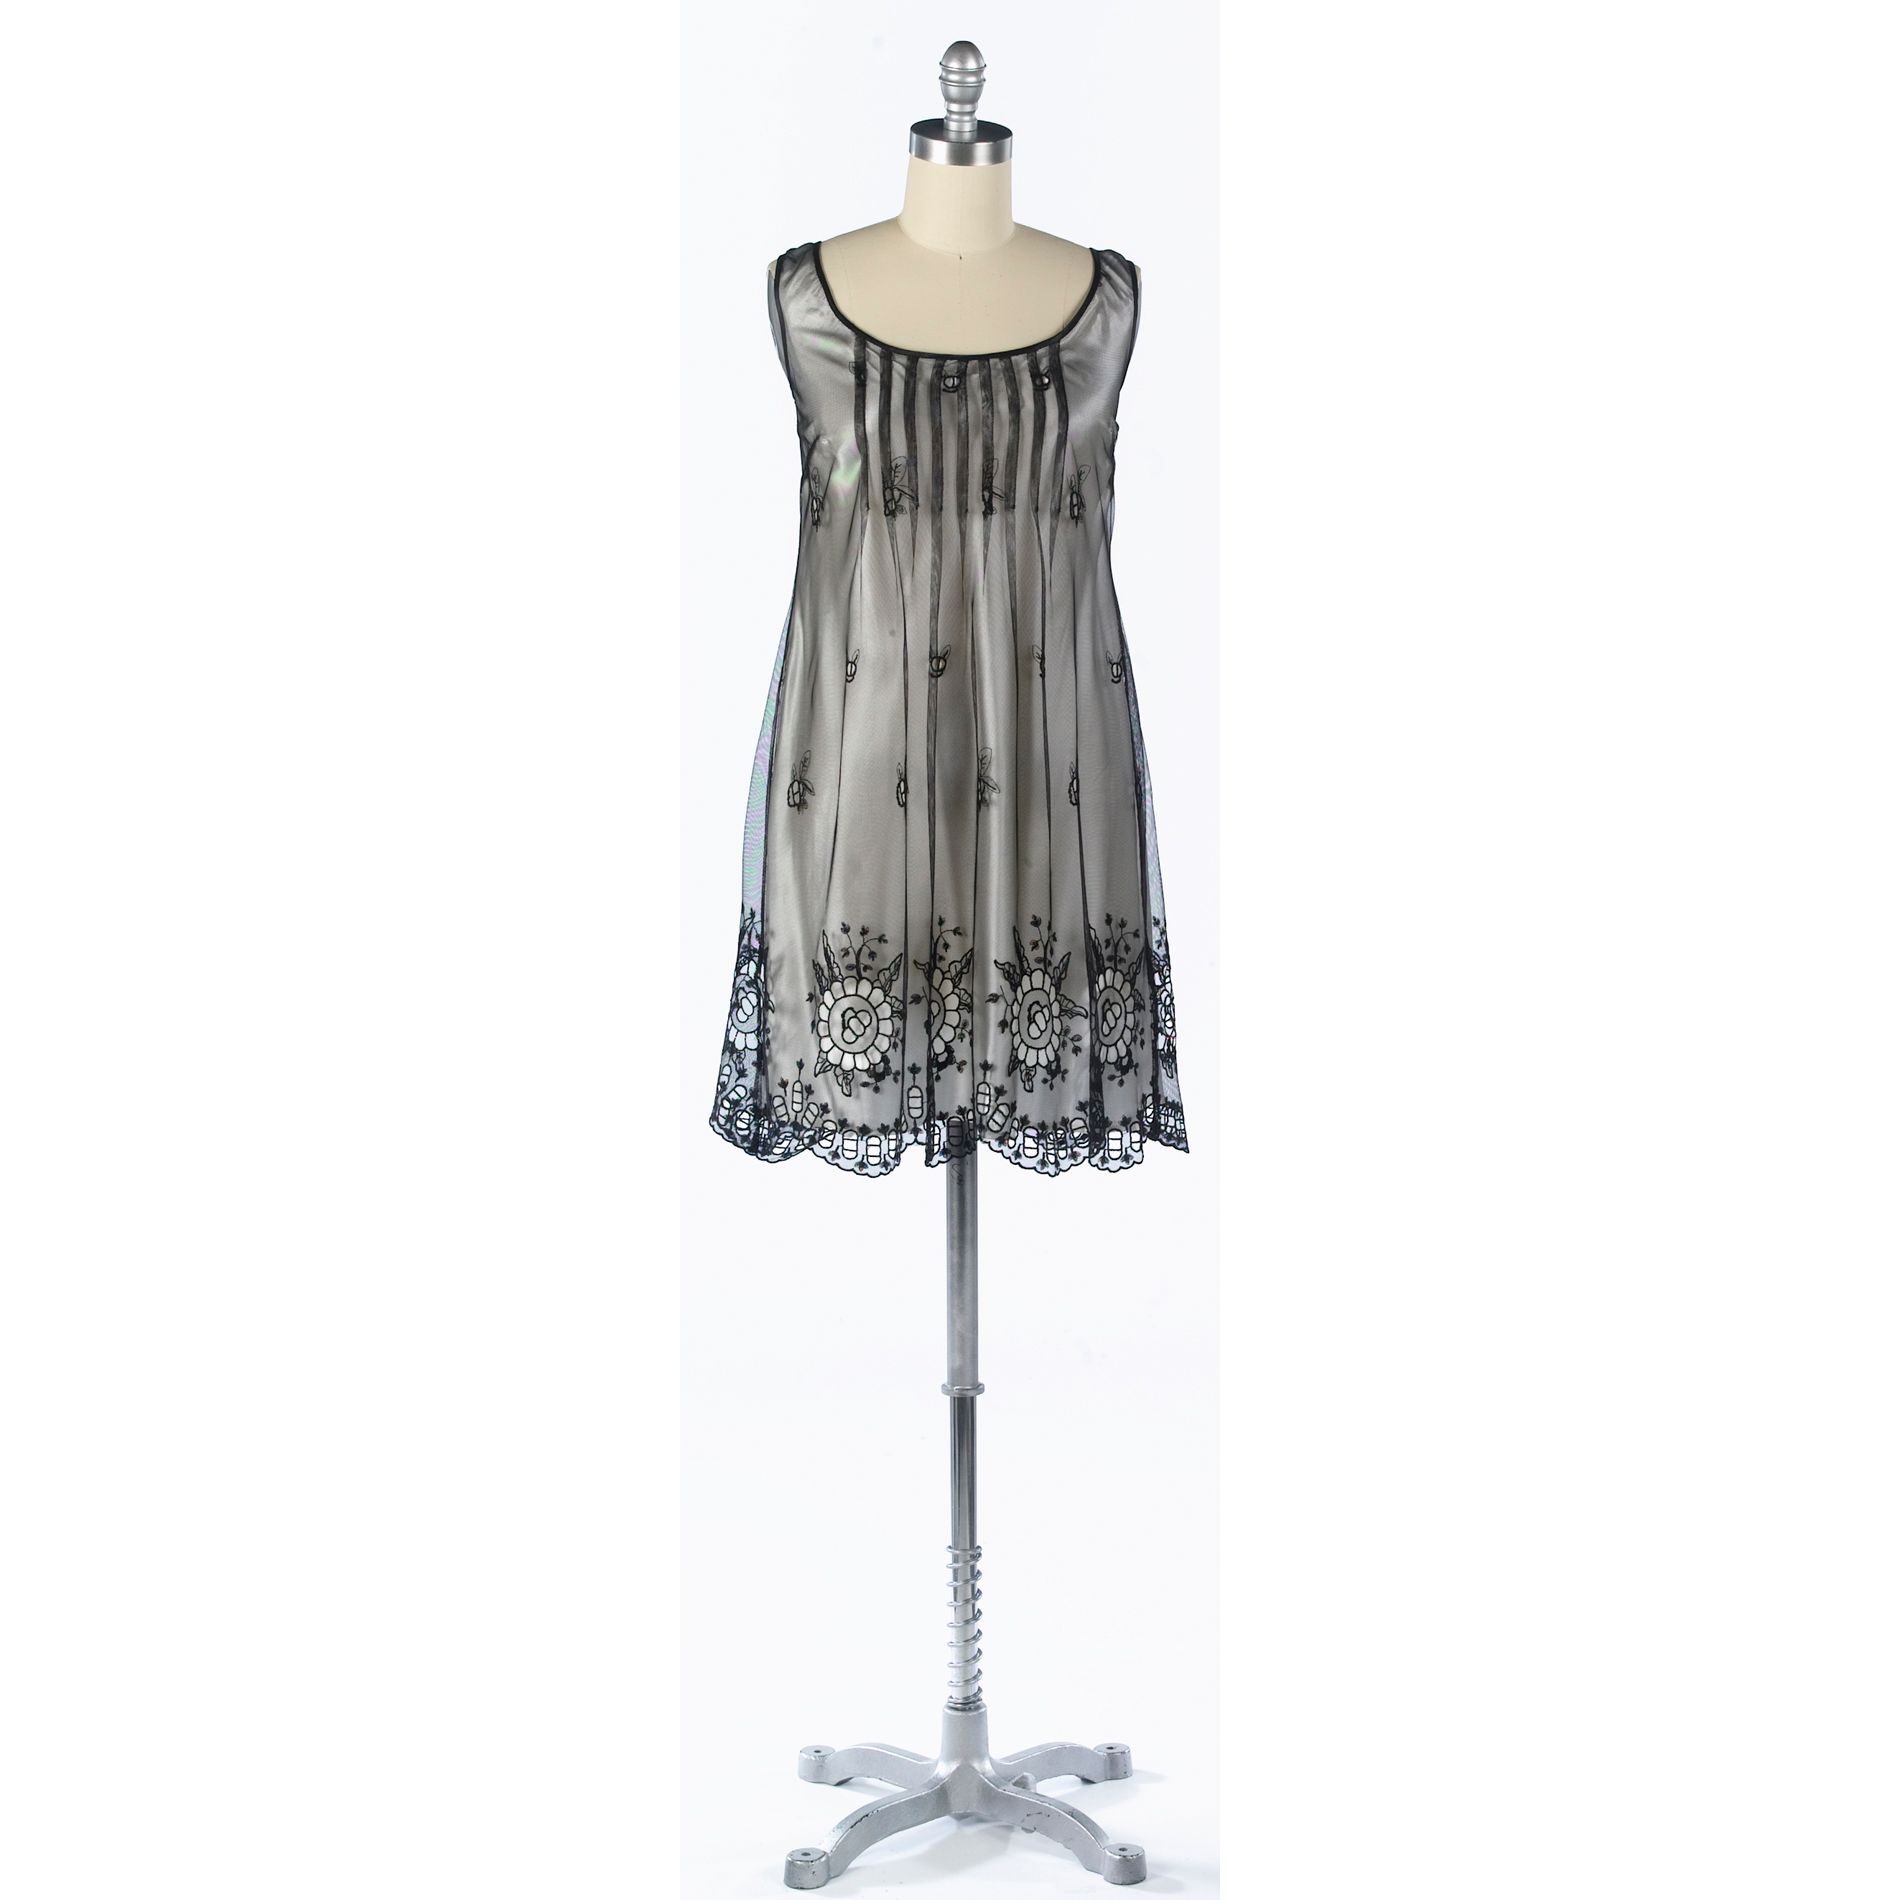 Sally Lou Fashions Embroidered Overlay Dress